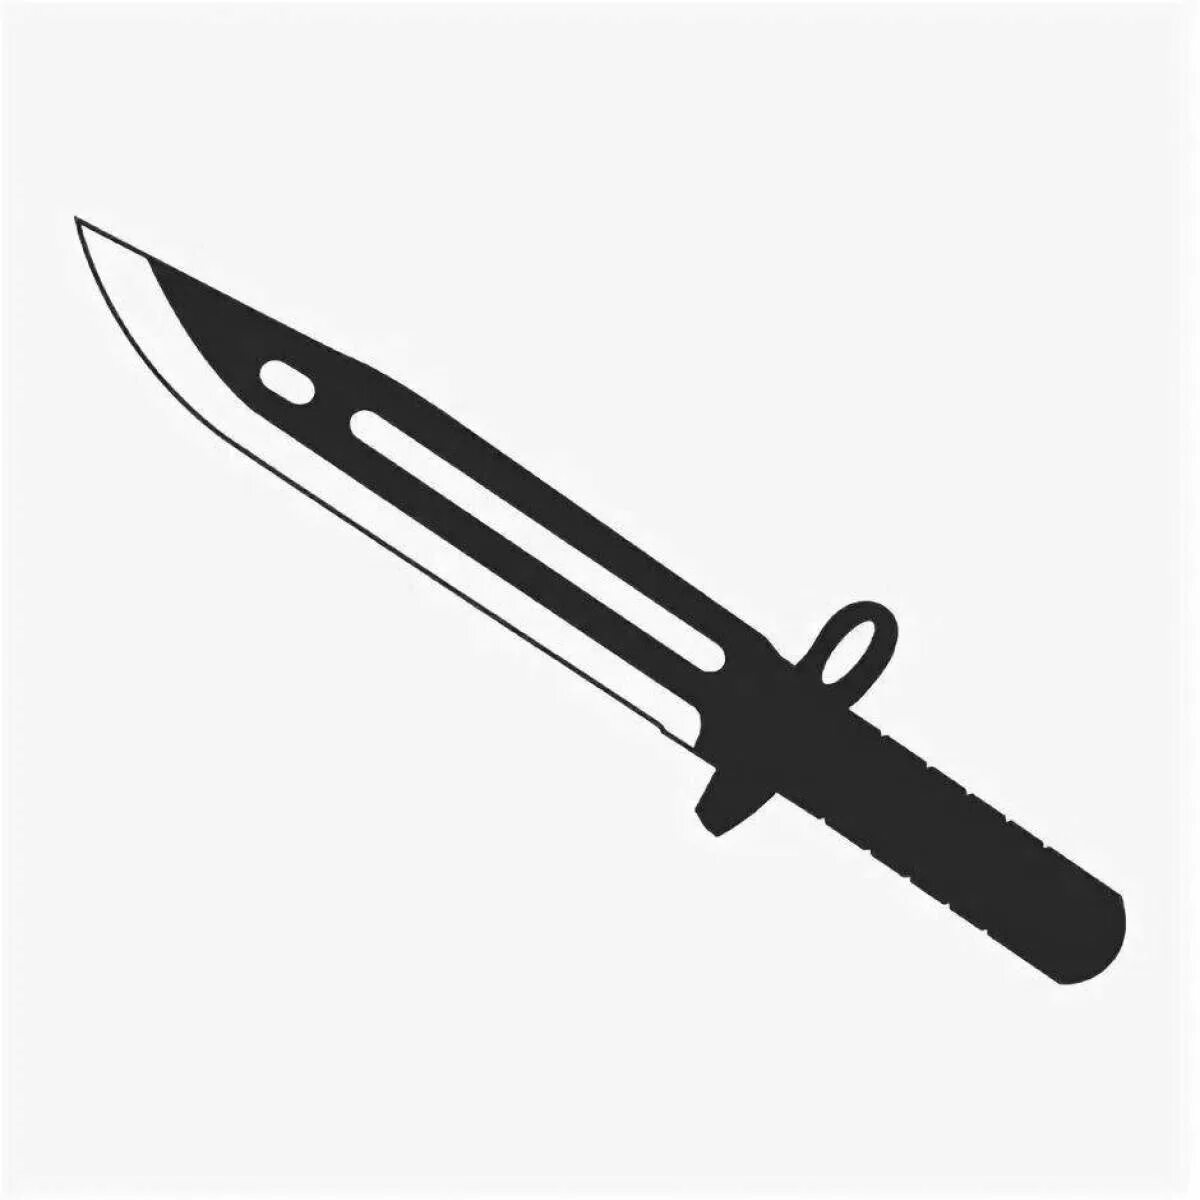 М9 байонет чёрно белый. СТЕНДОФФ 2 нож м9. М9 нож стандофф 2. Раскраски стандофф 2 ножи м9 байонет. Ножи из standoff рисунок